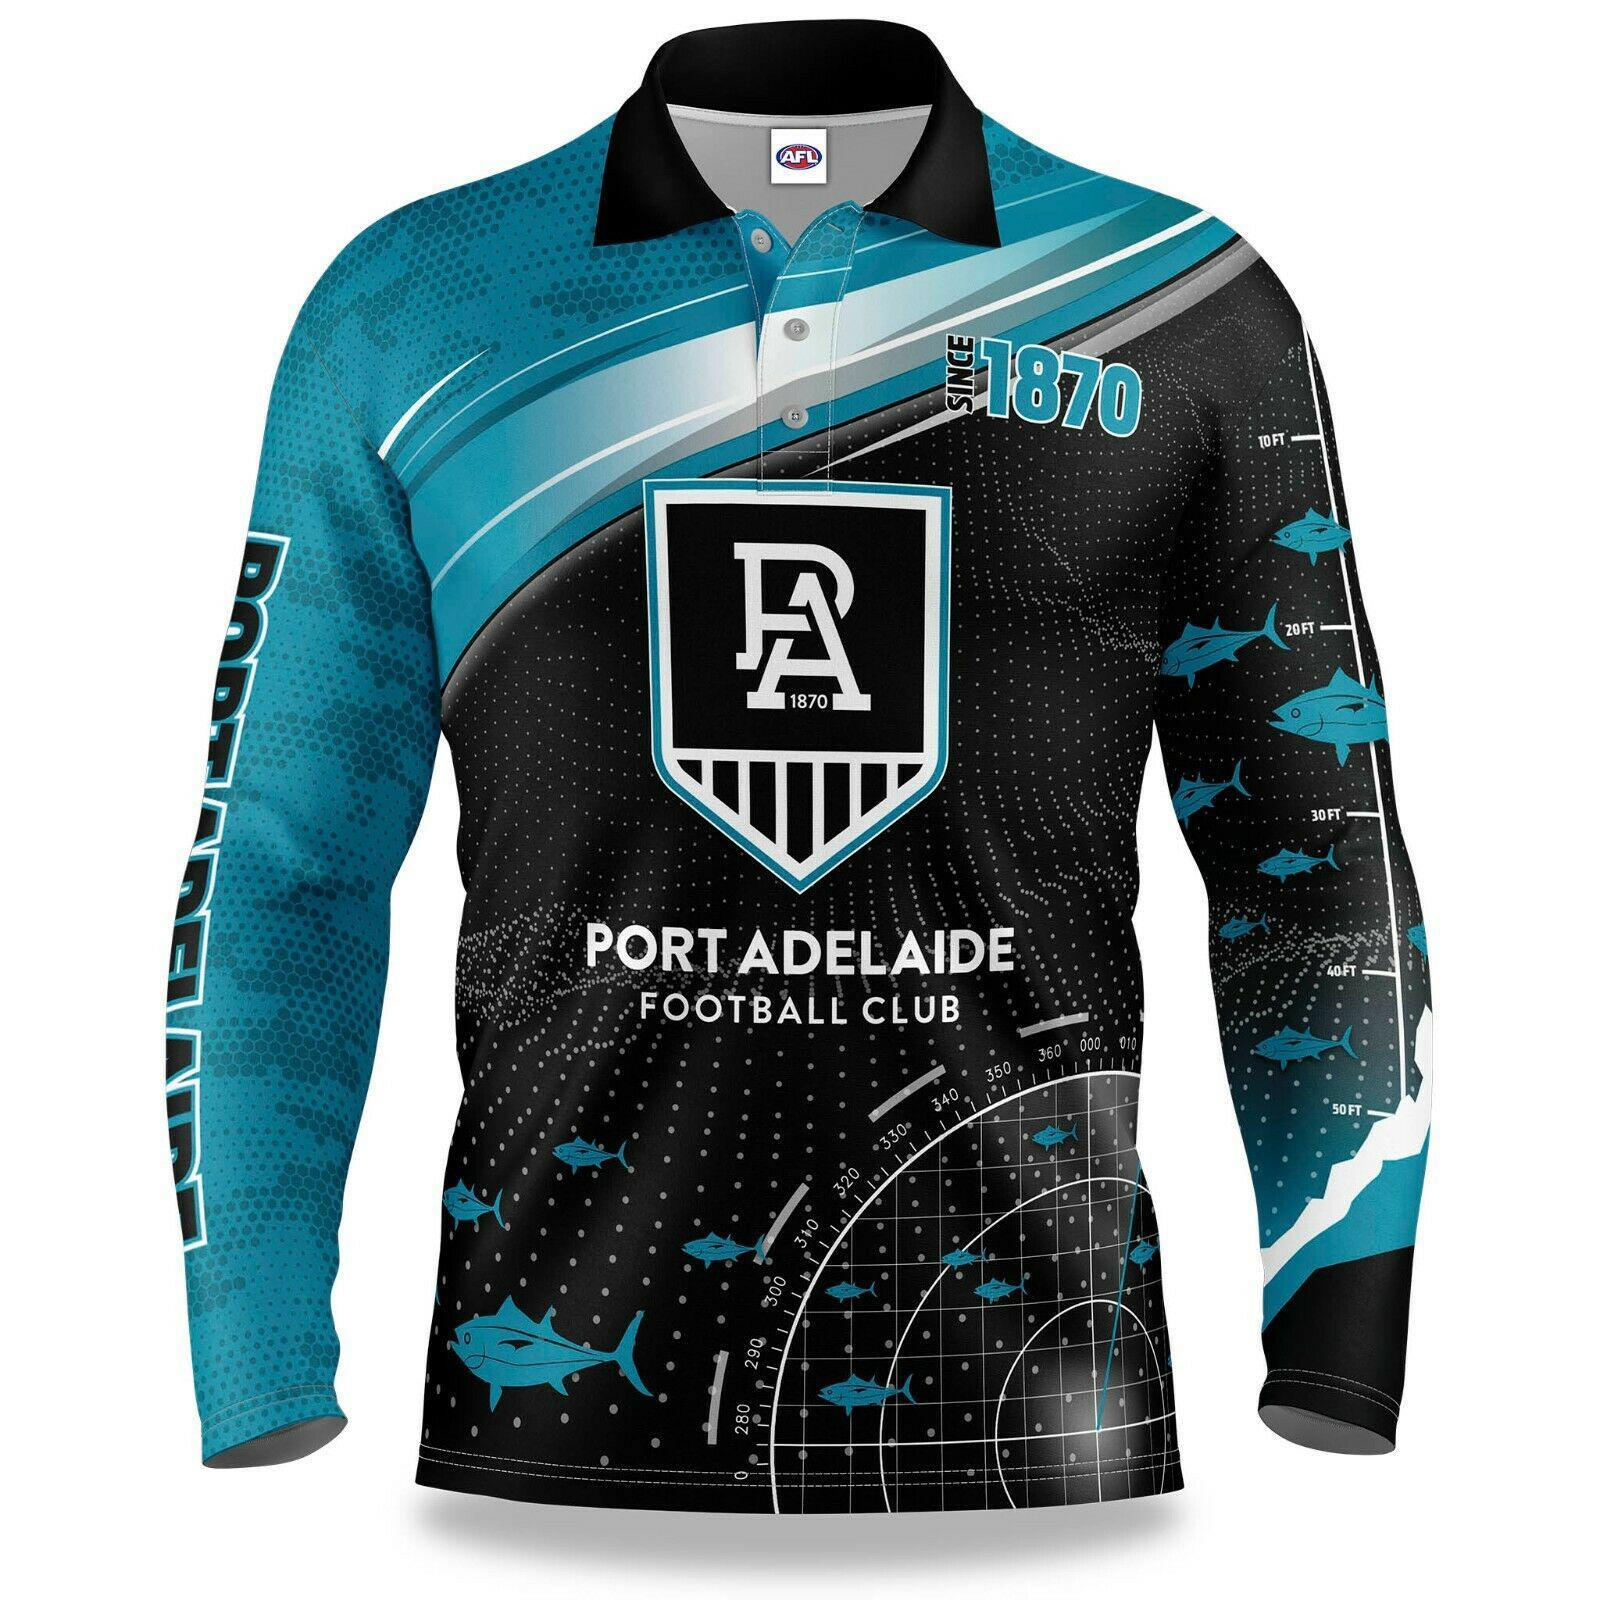 AFL Long Sleeve Fishfinder Fishing Polo Tee Shirt - Port Adelaide Power - Adult